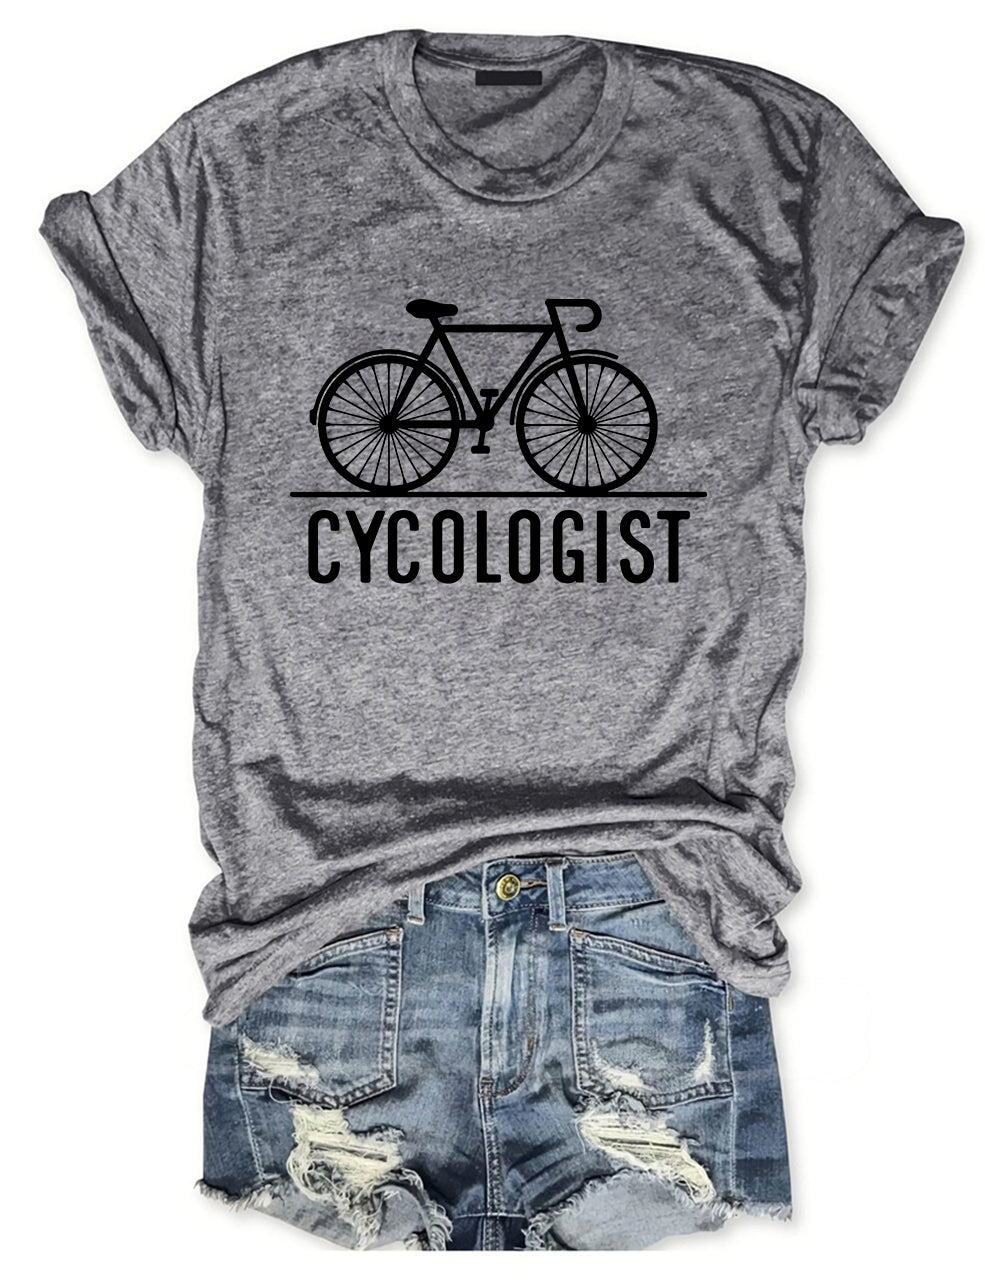 Cycologist T-shirt